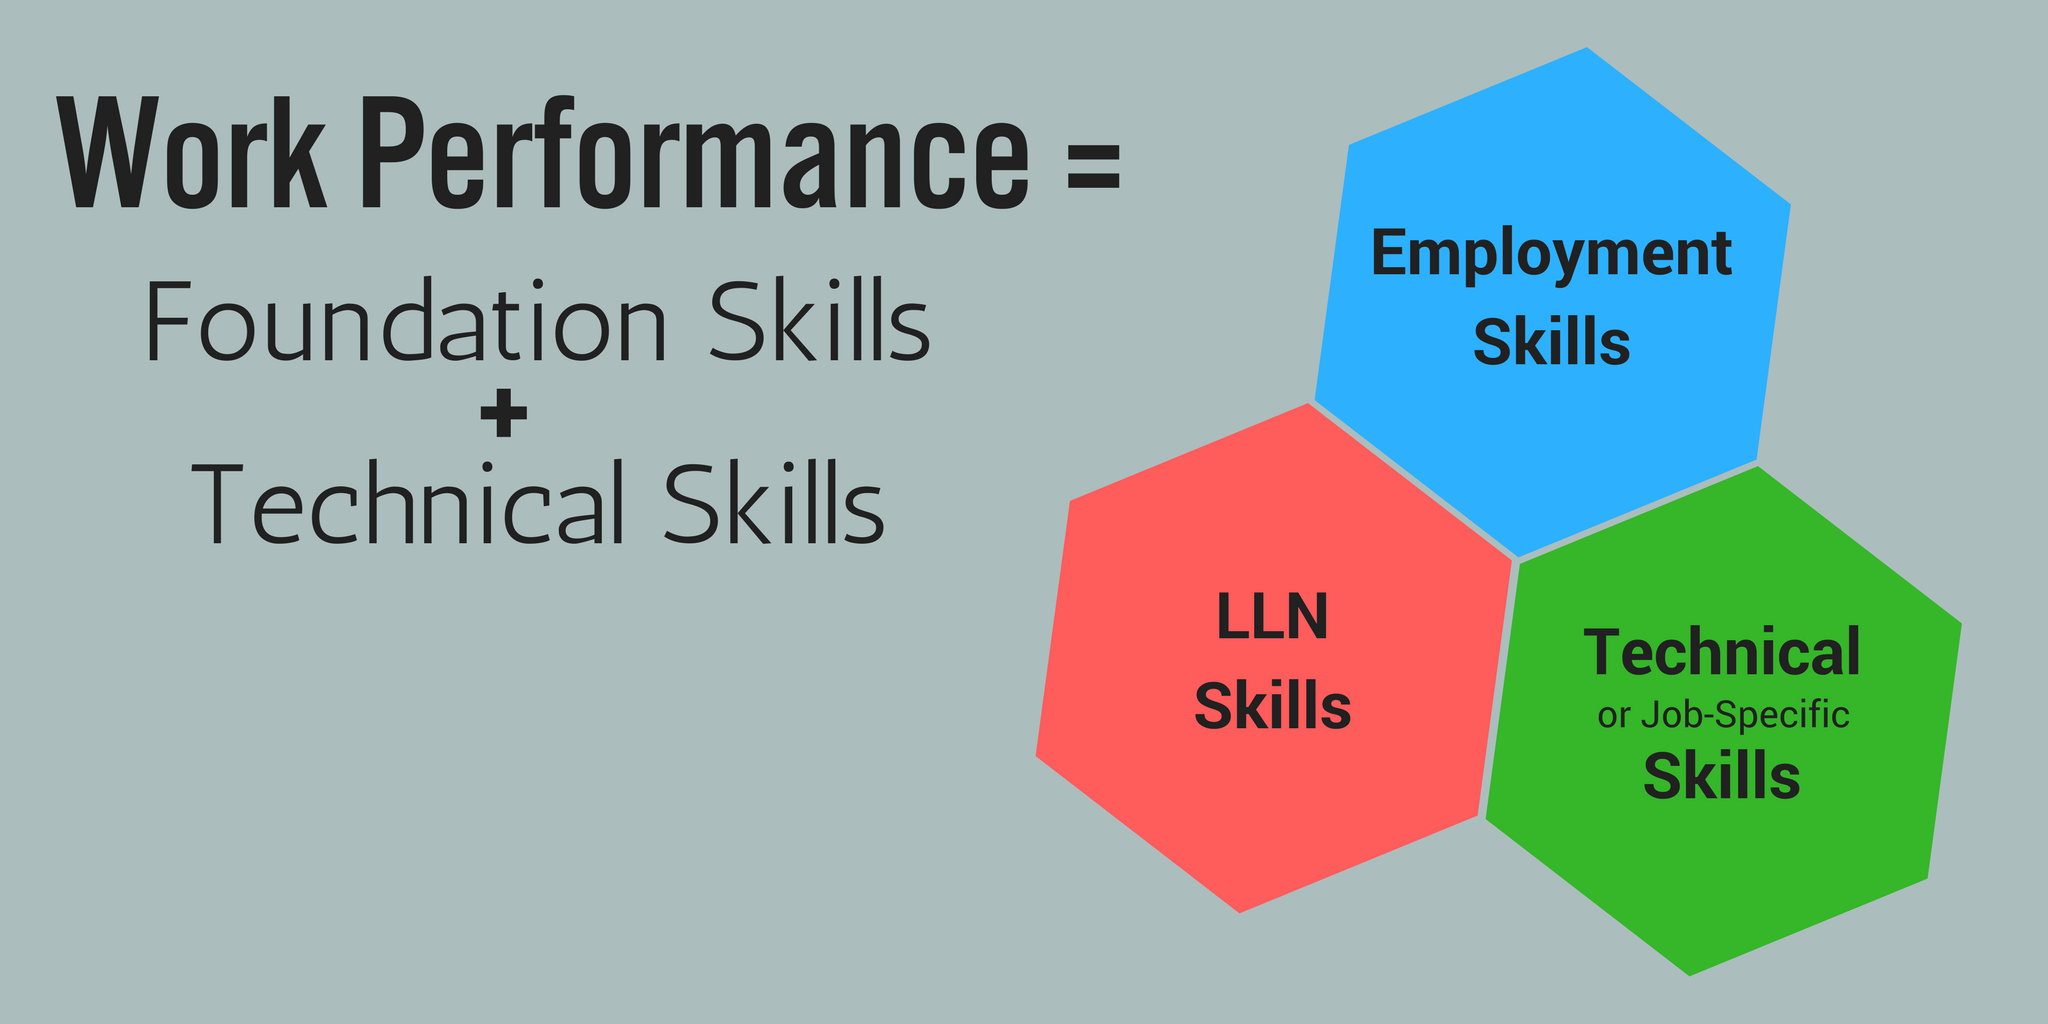 Work Performance = Foundation Skills + Technical Skills